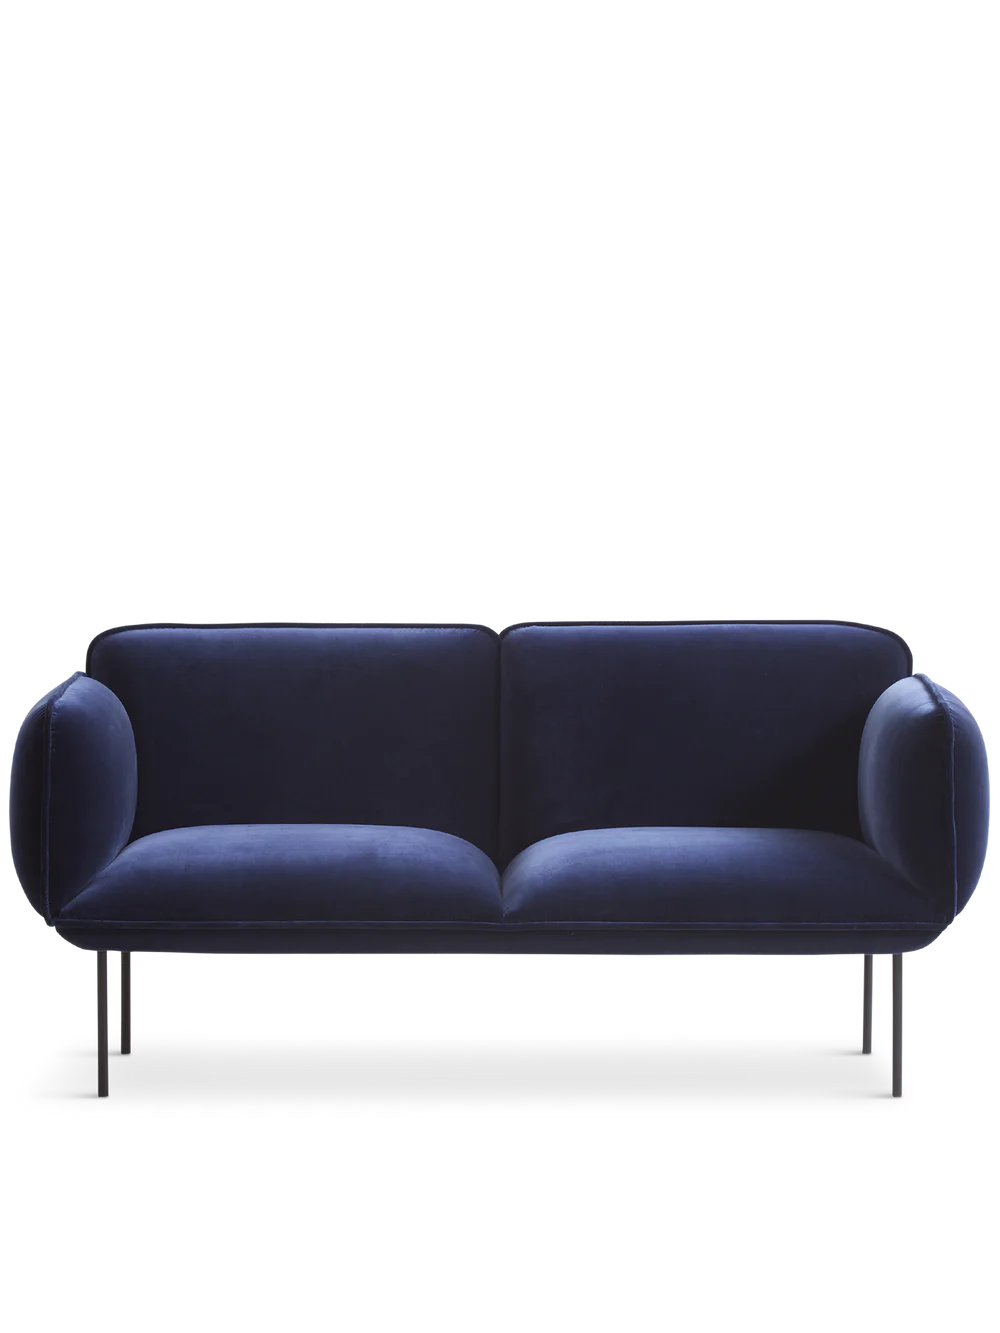 Nakki 2 seater sofa in many colors and fabrics